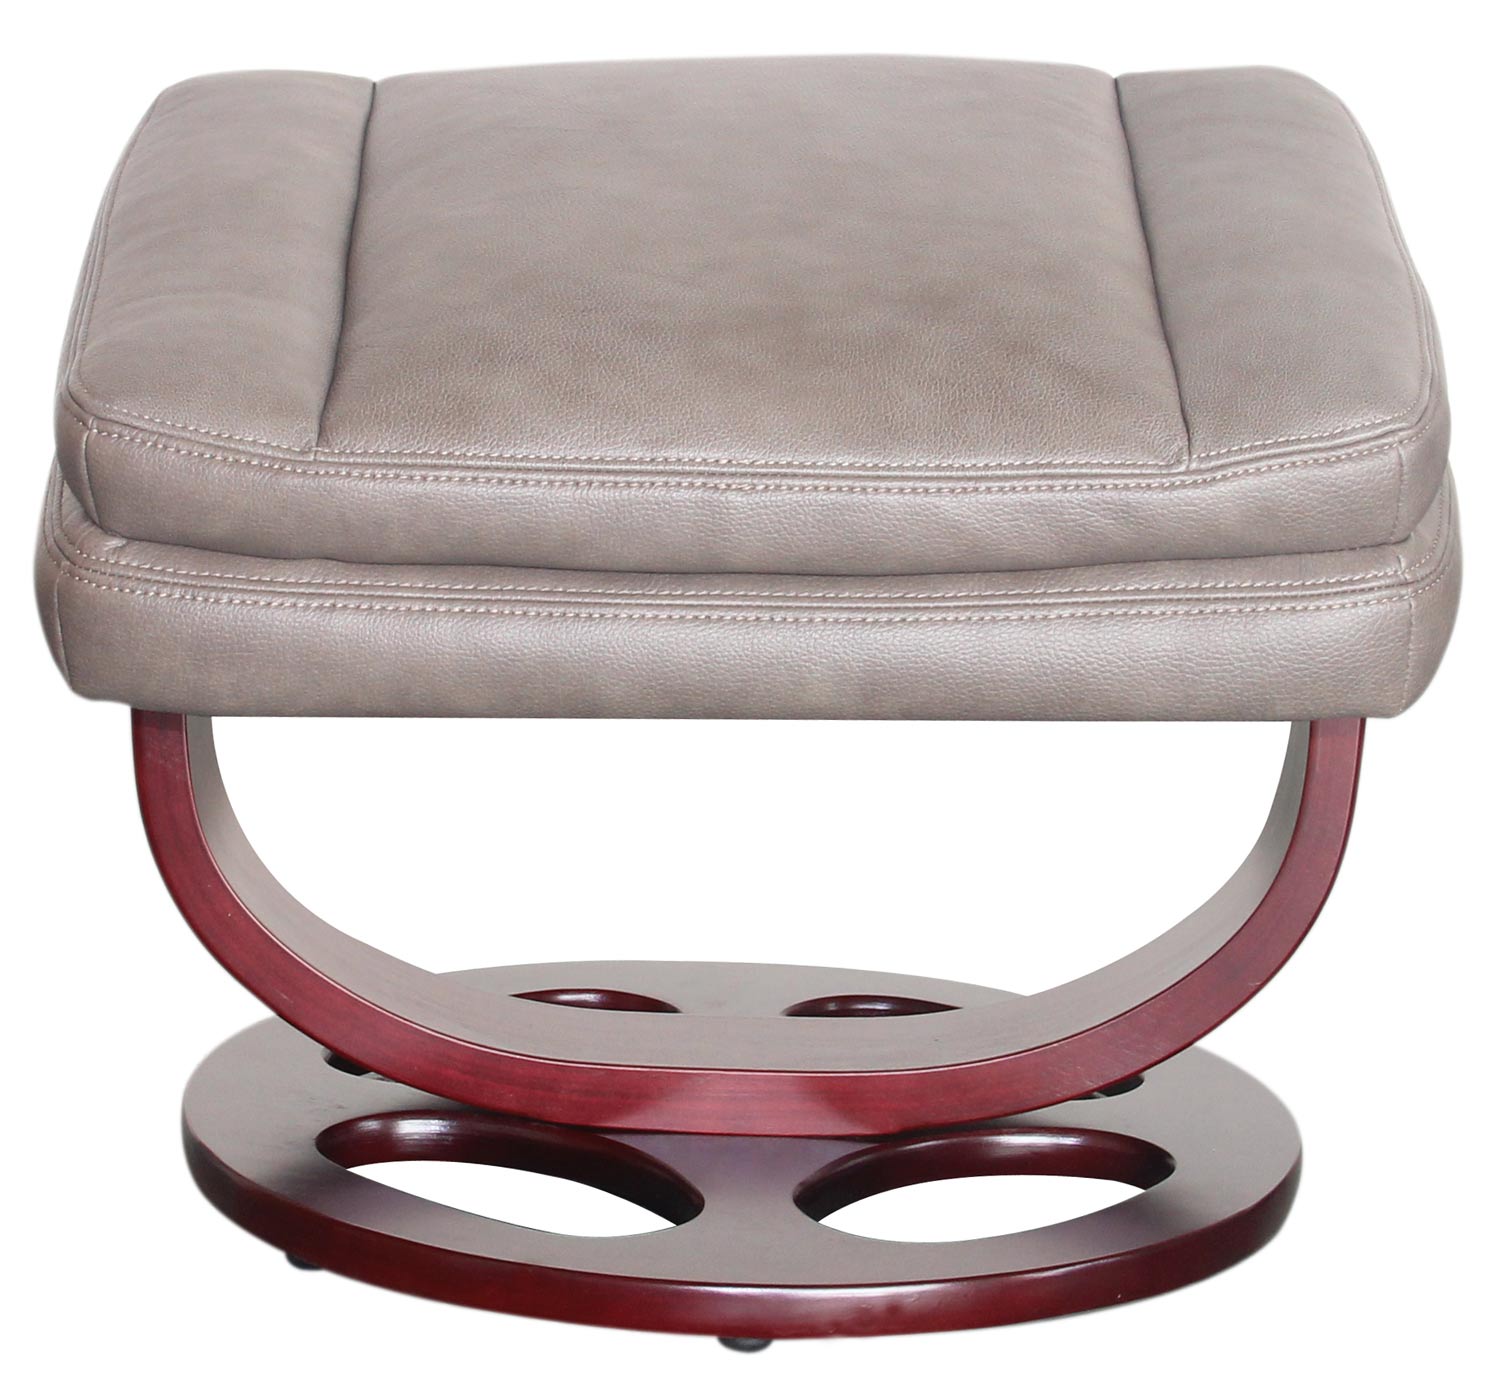 Barcalounger Bella Pedestal Recliner Chair and Ottoman - Chelsea Cobblestone/Leather Match